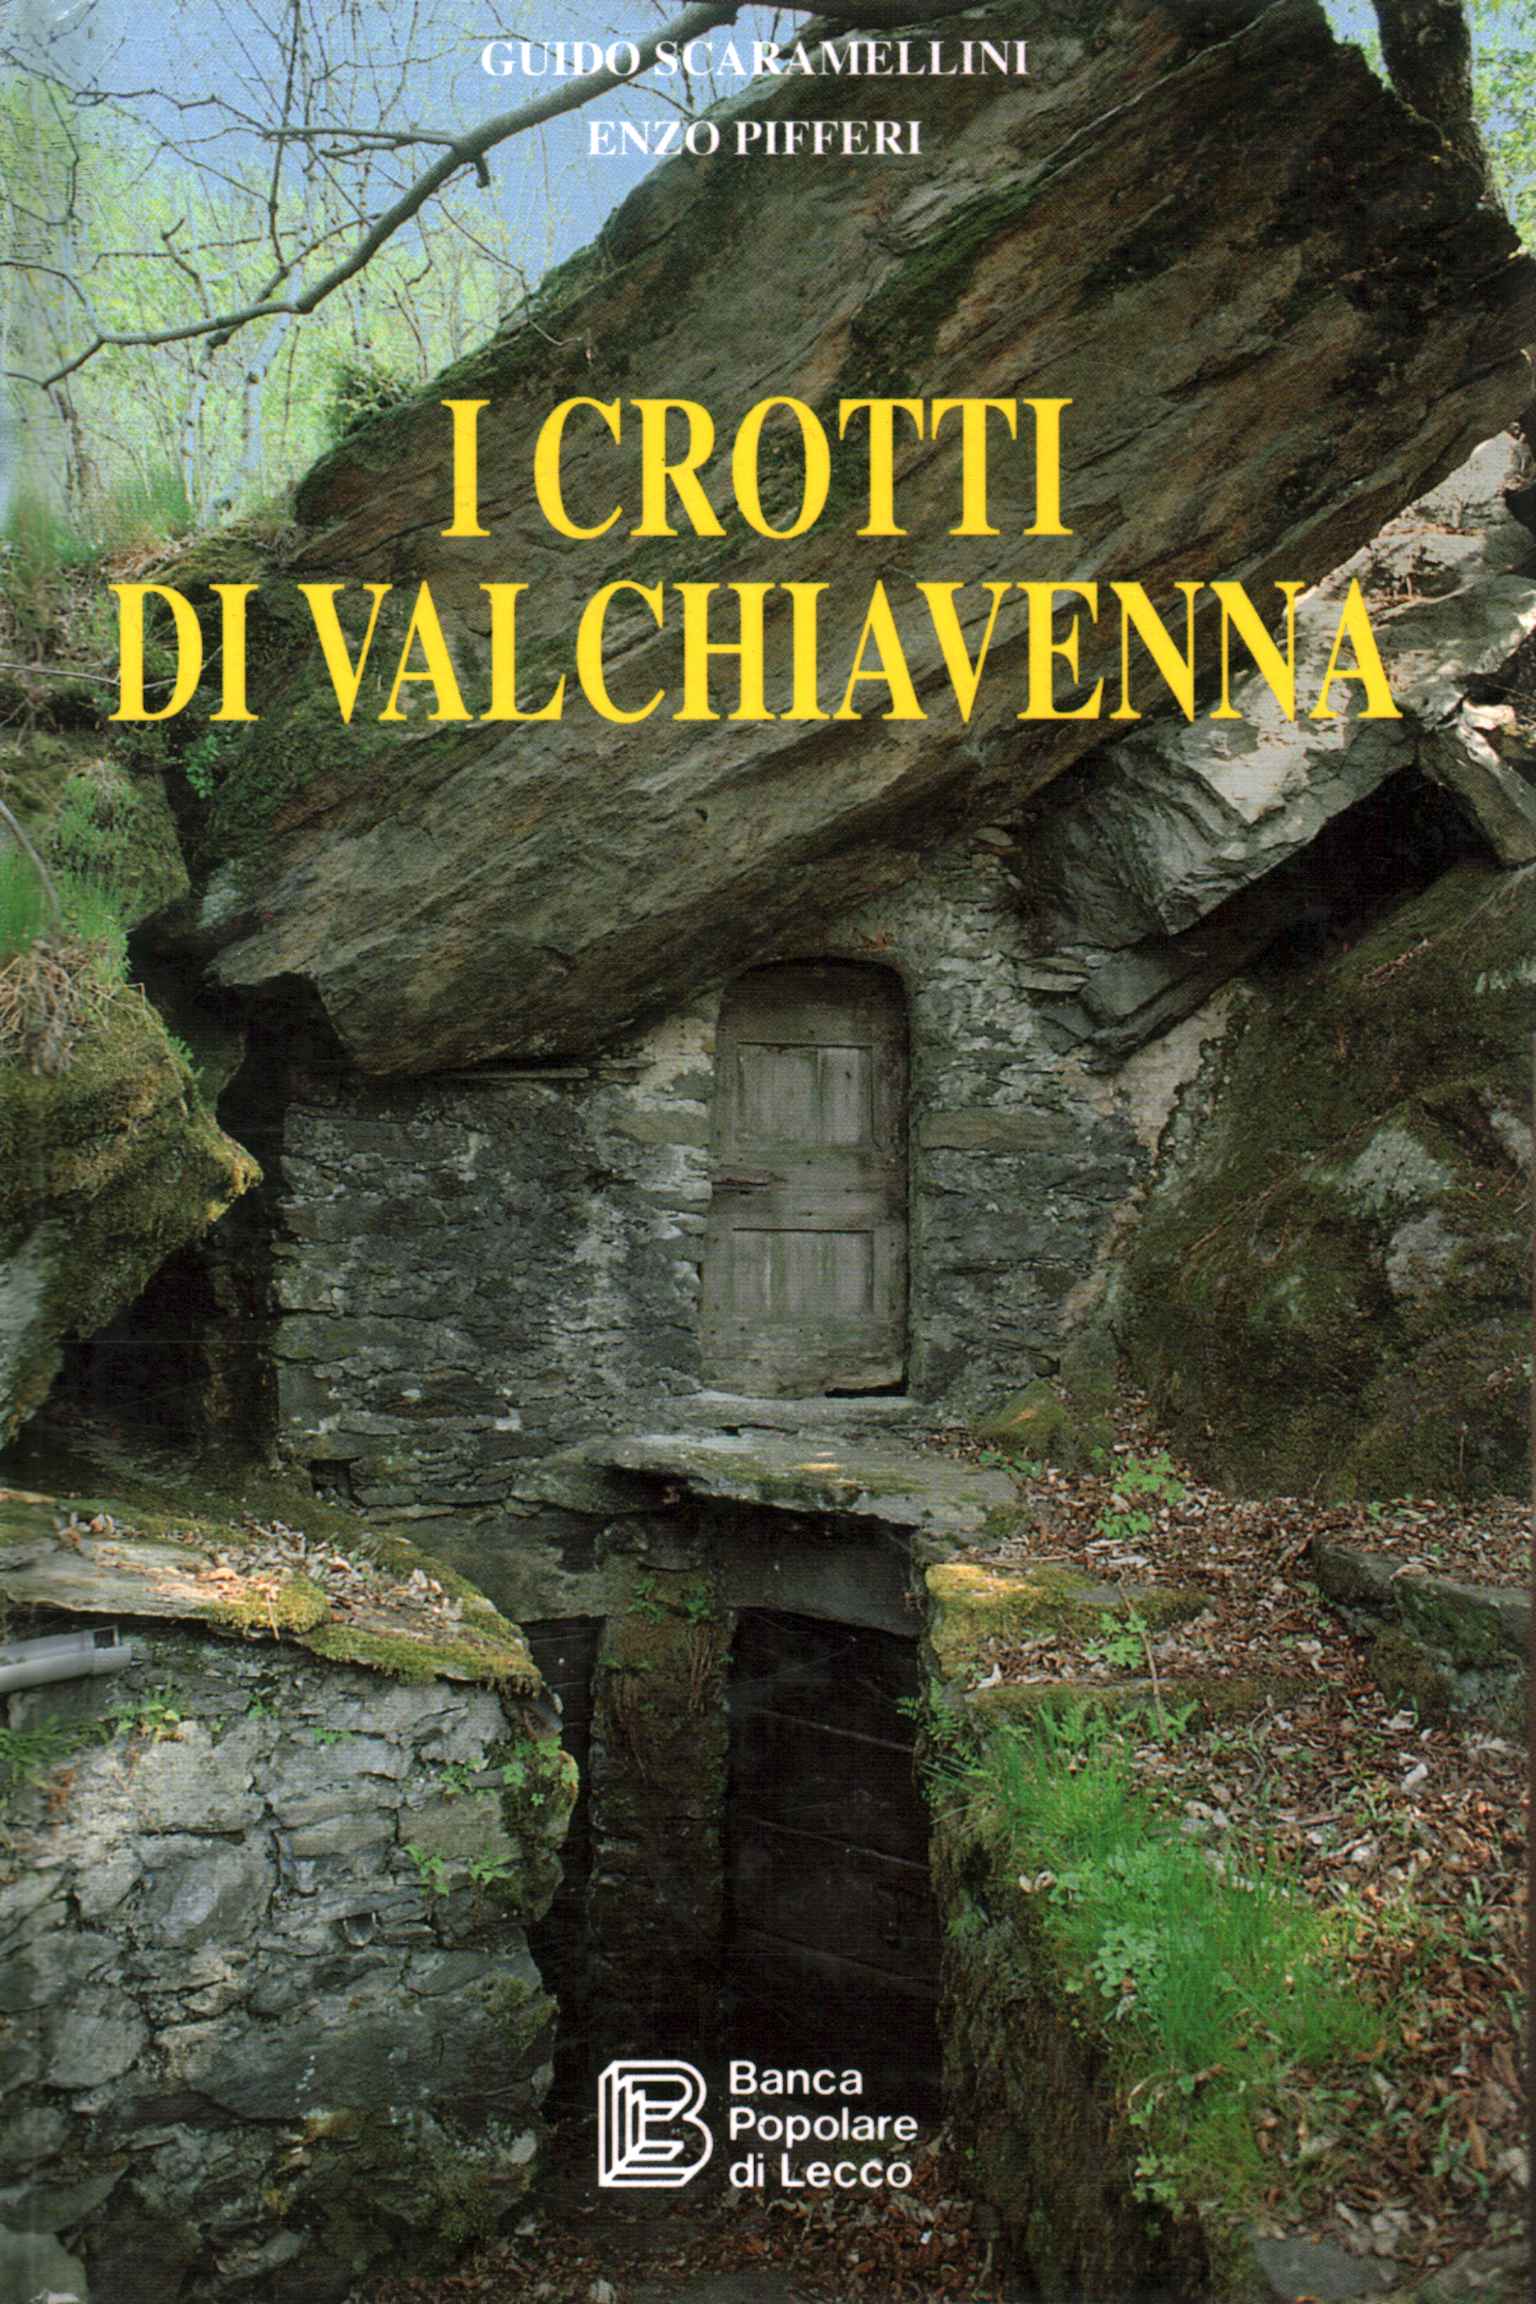 The crotti of Valchiavenna